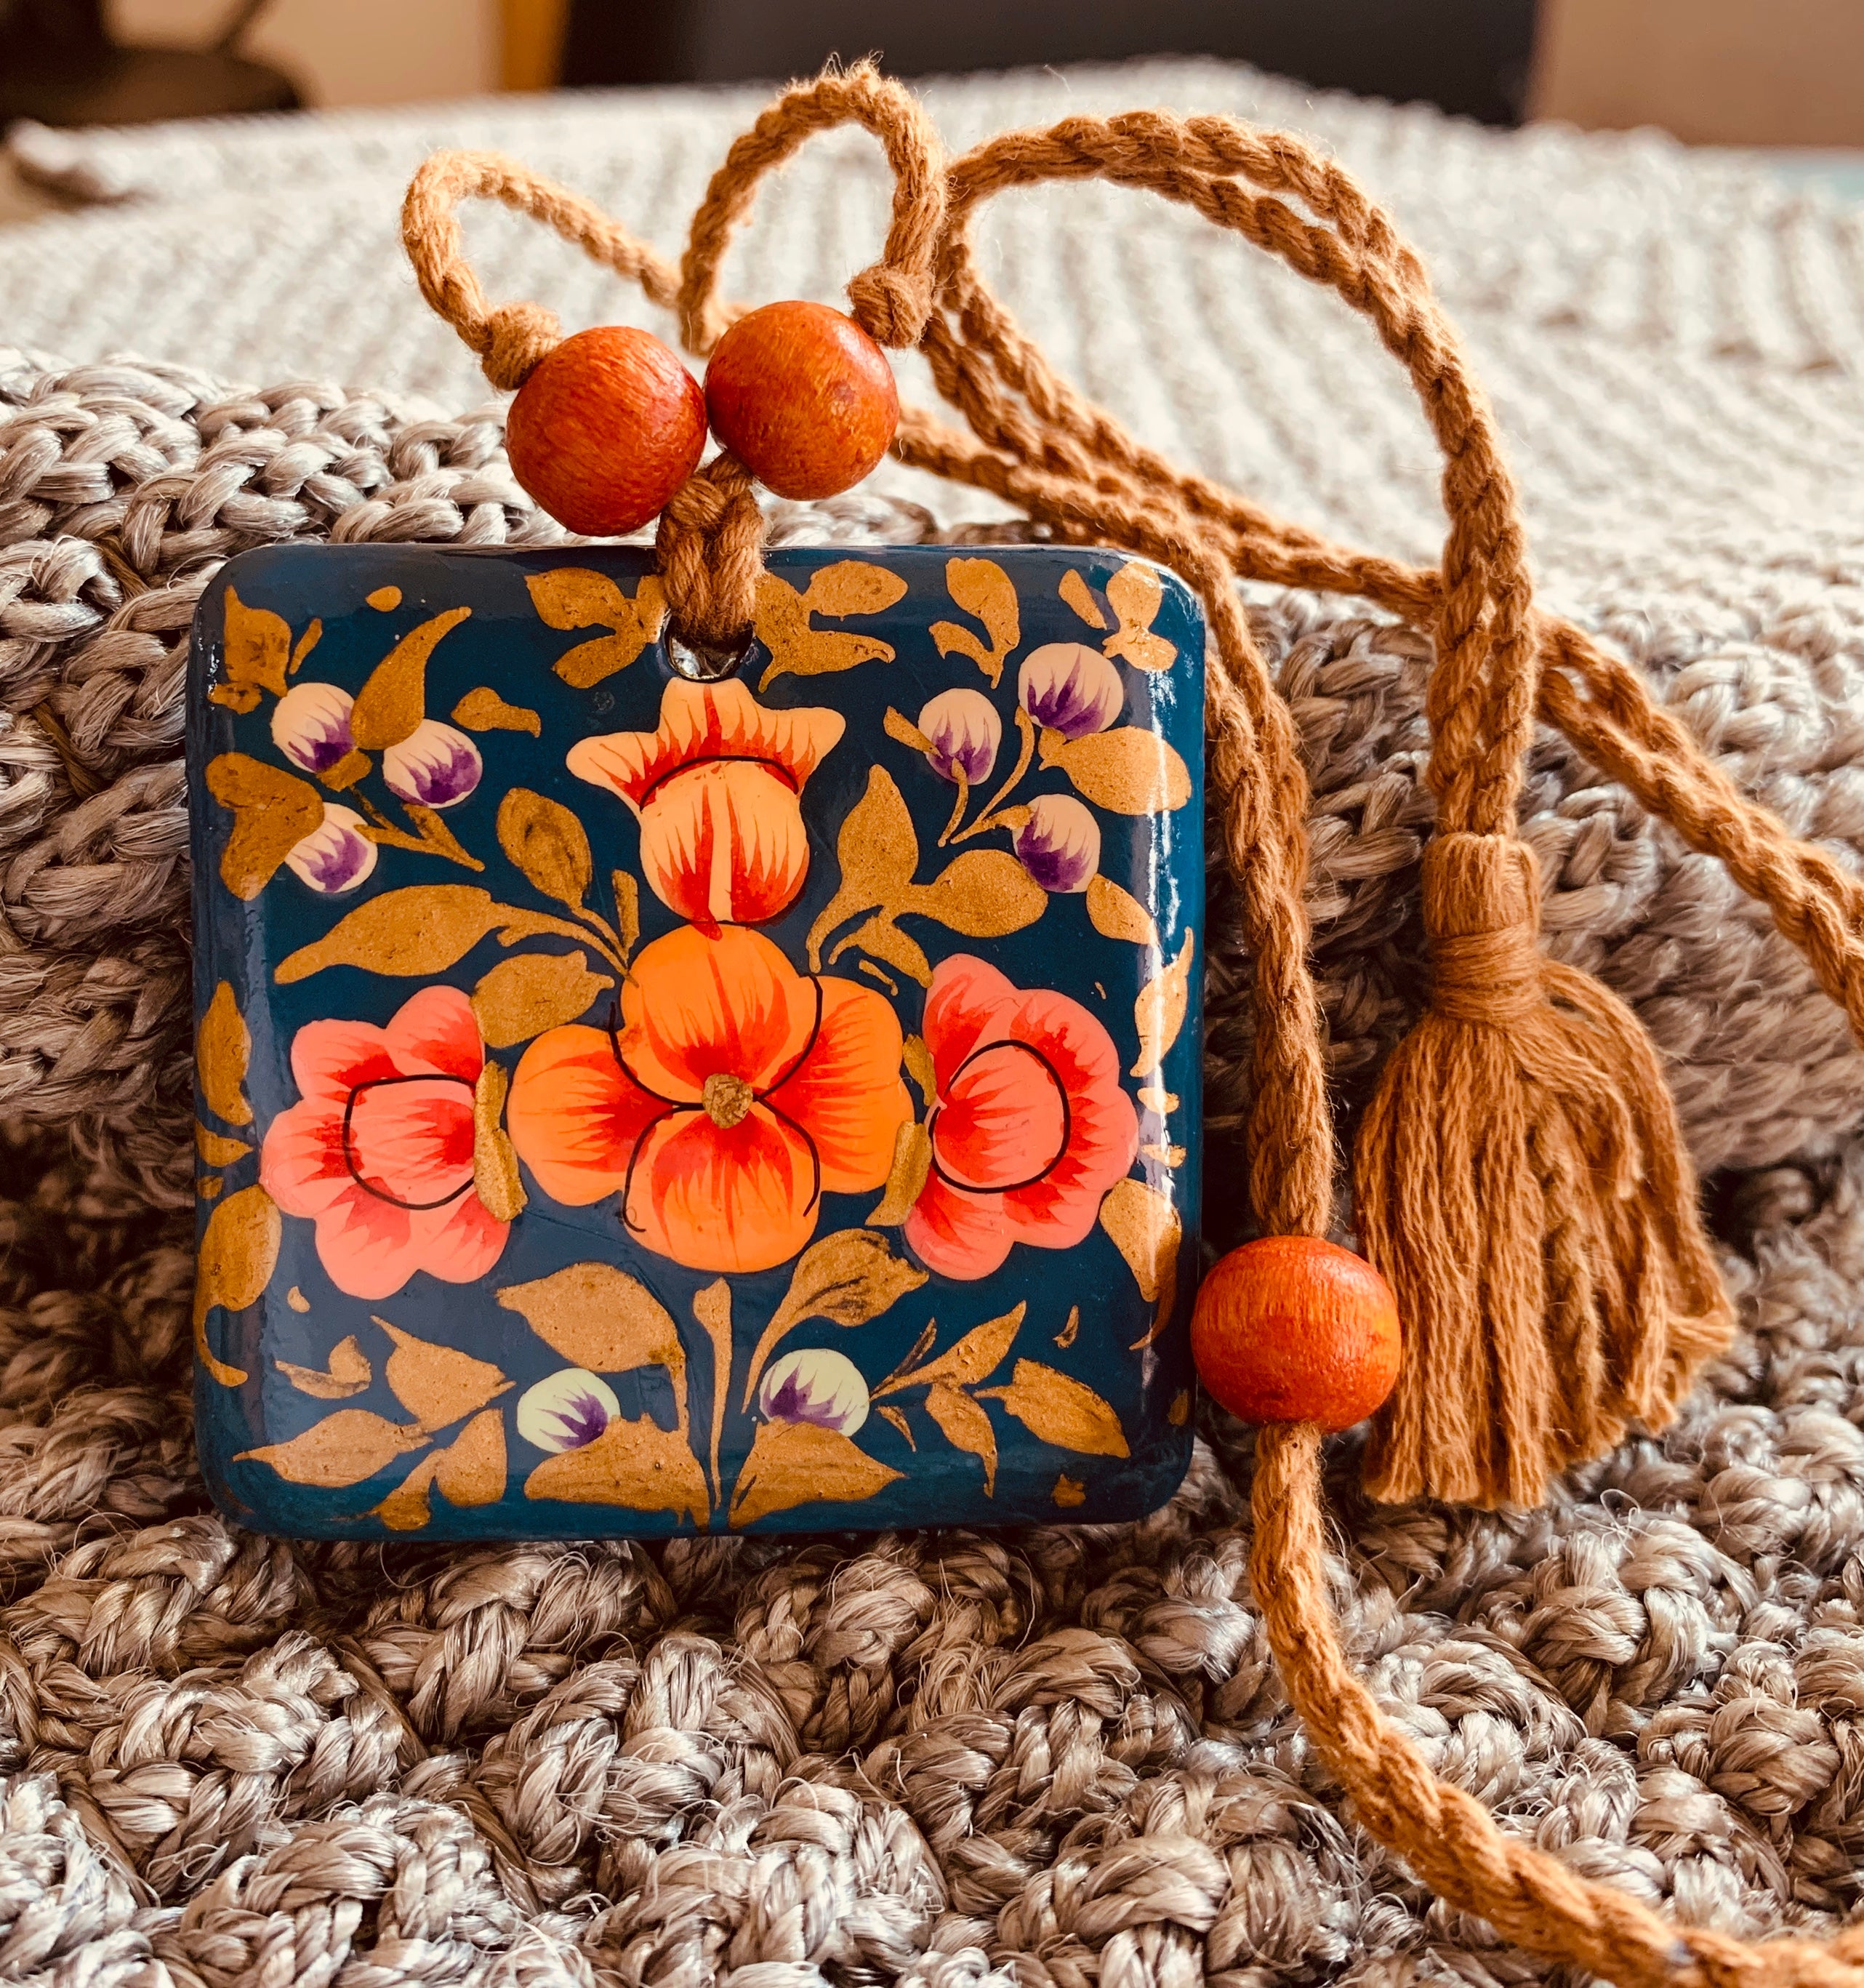 Finding Enid with LOVE - Papier Mâché Orange Flower on Antique White Box Bag  by Enid Collins